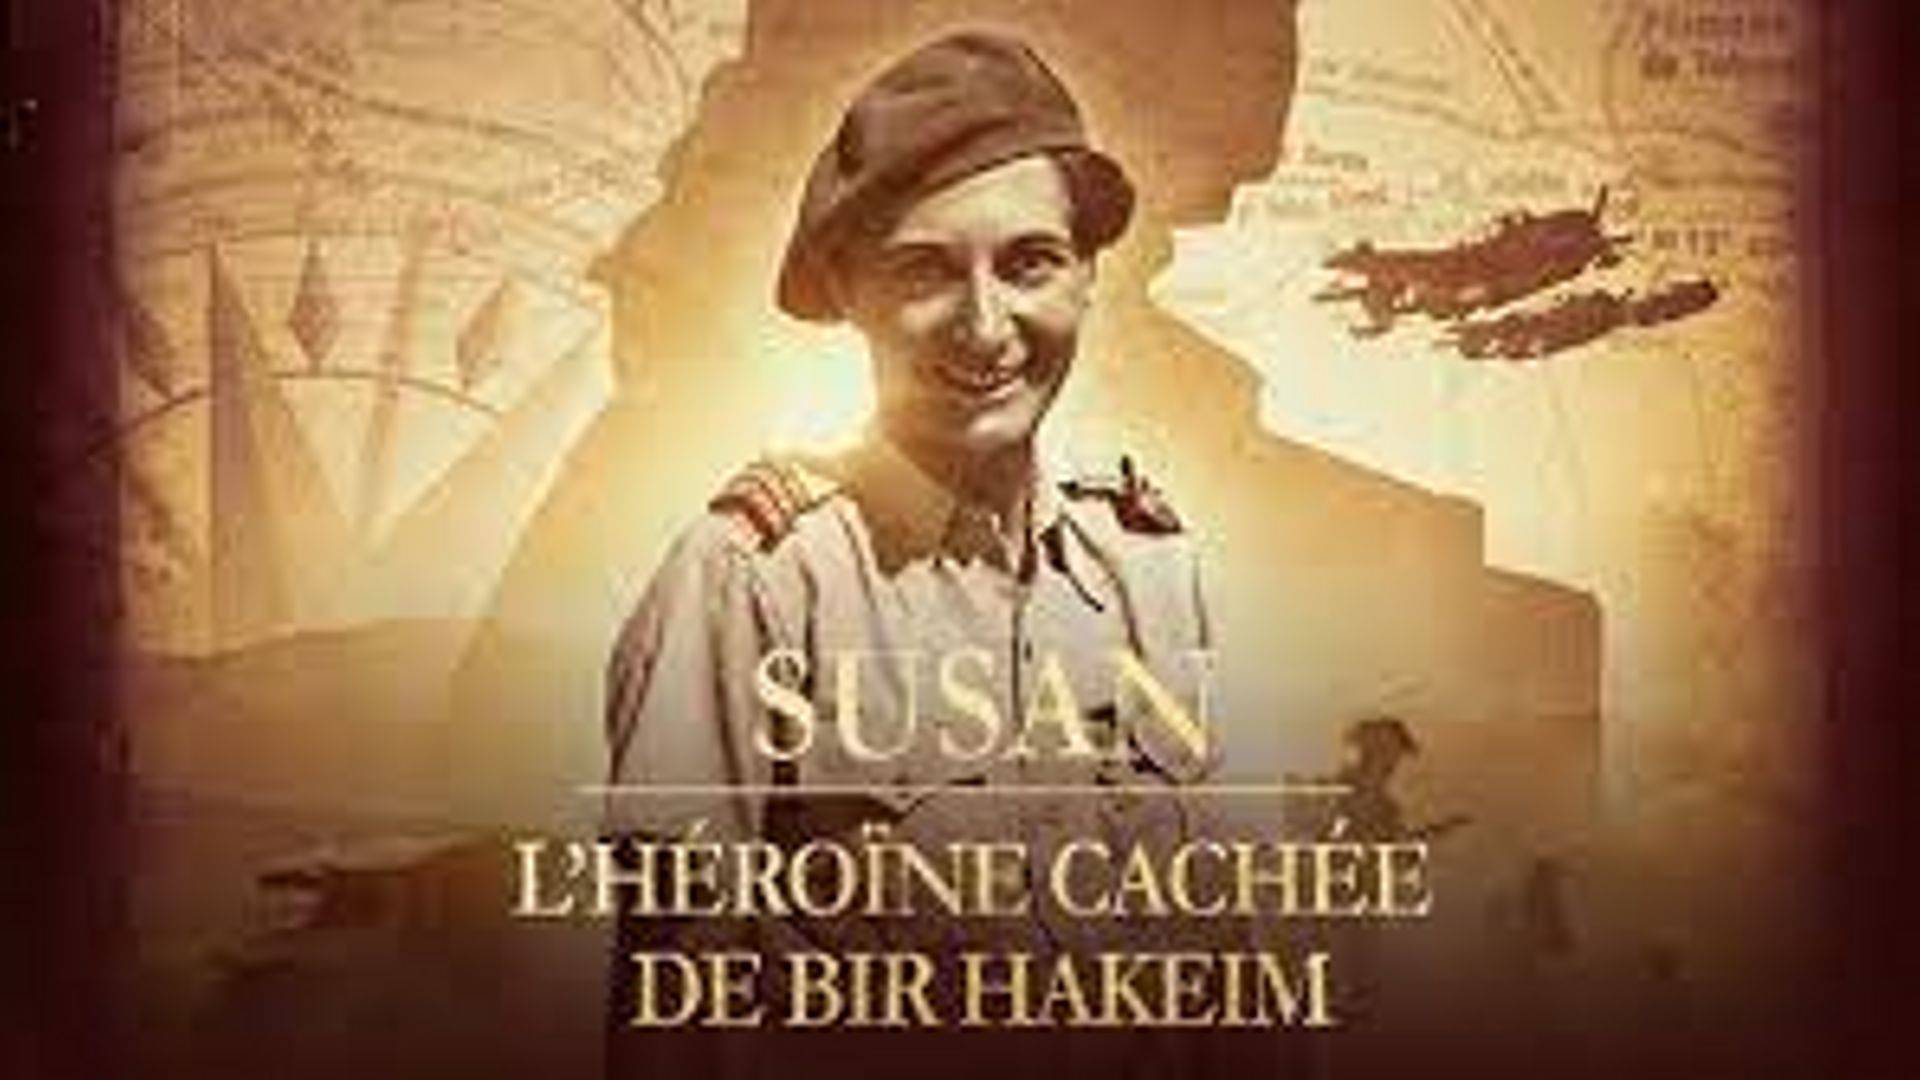 Suzan, l’héroïne cachée de Bir Hakeim.